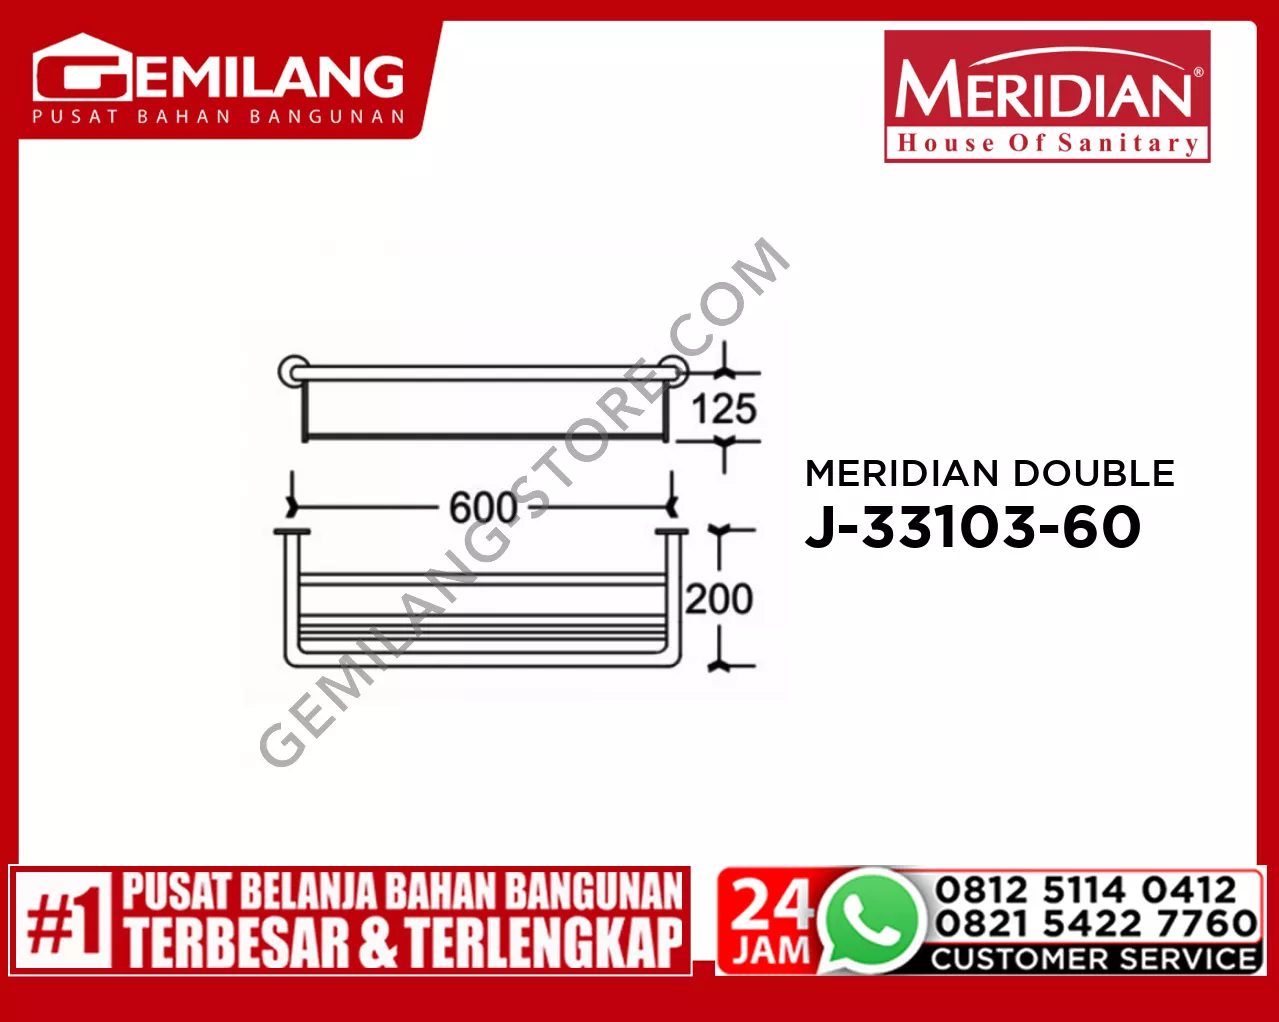 MERIDIAN DOUBLE TOWEL BAR 60cm AJ-33103-60